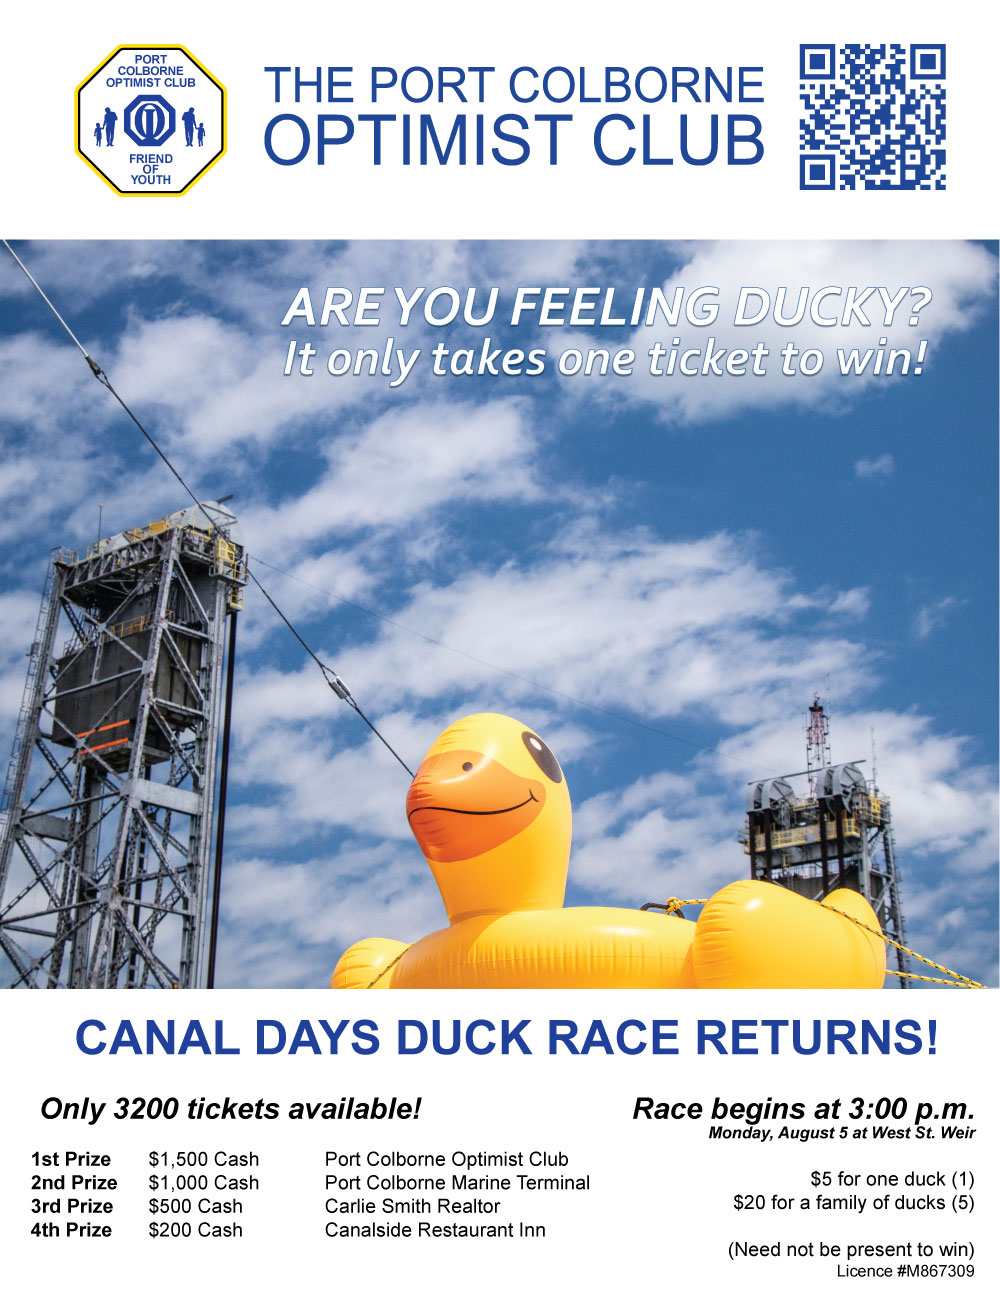 Canal Days Duck Race